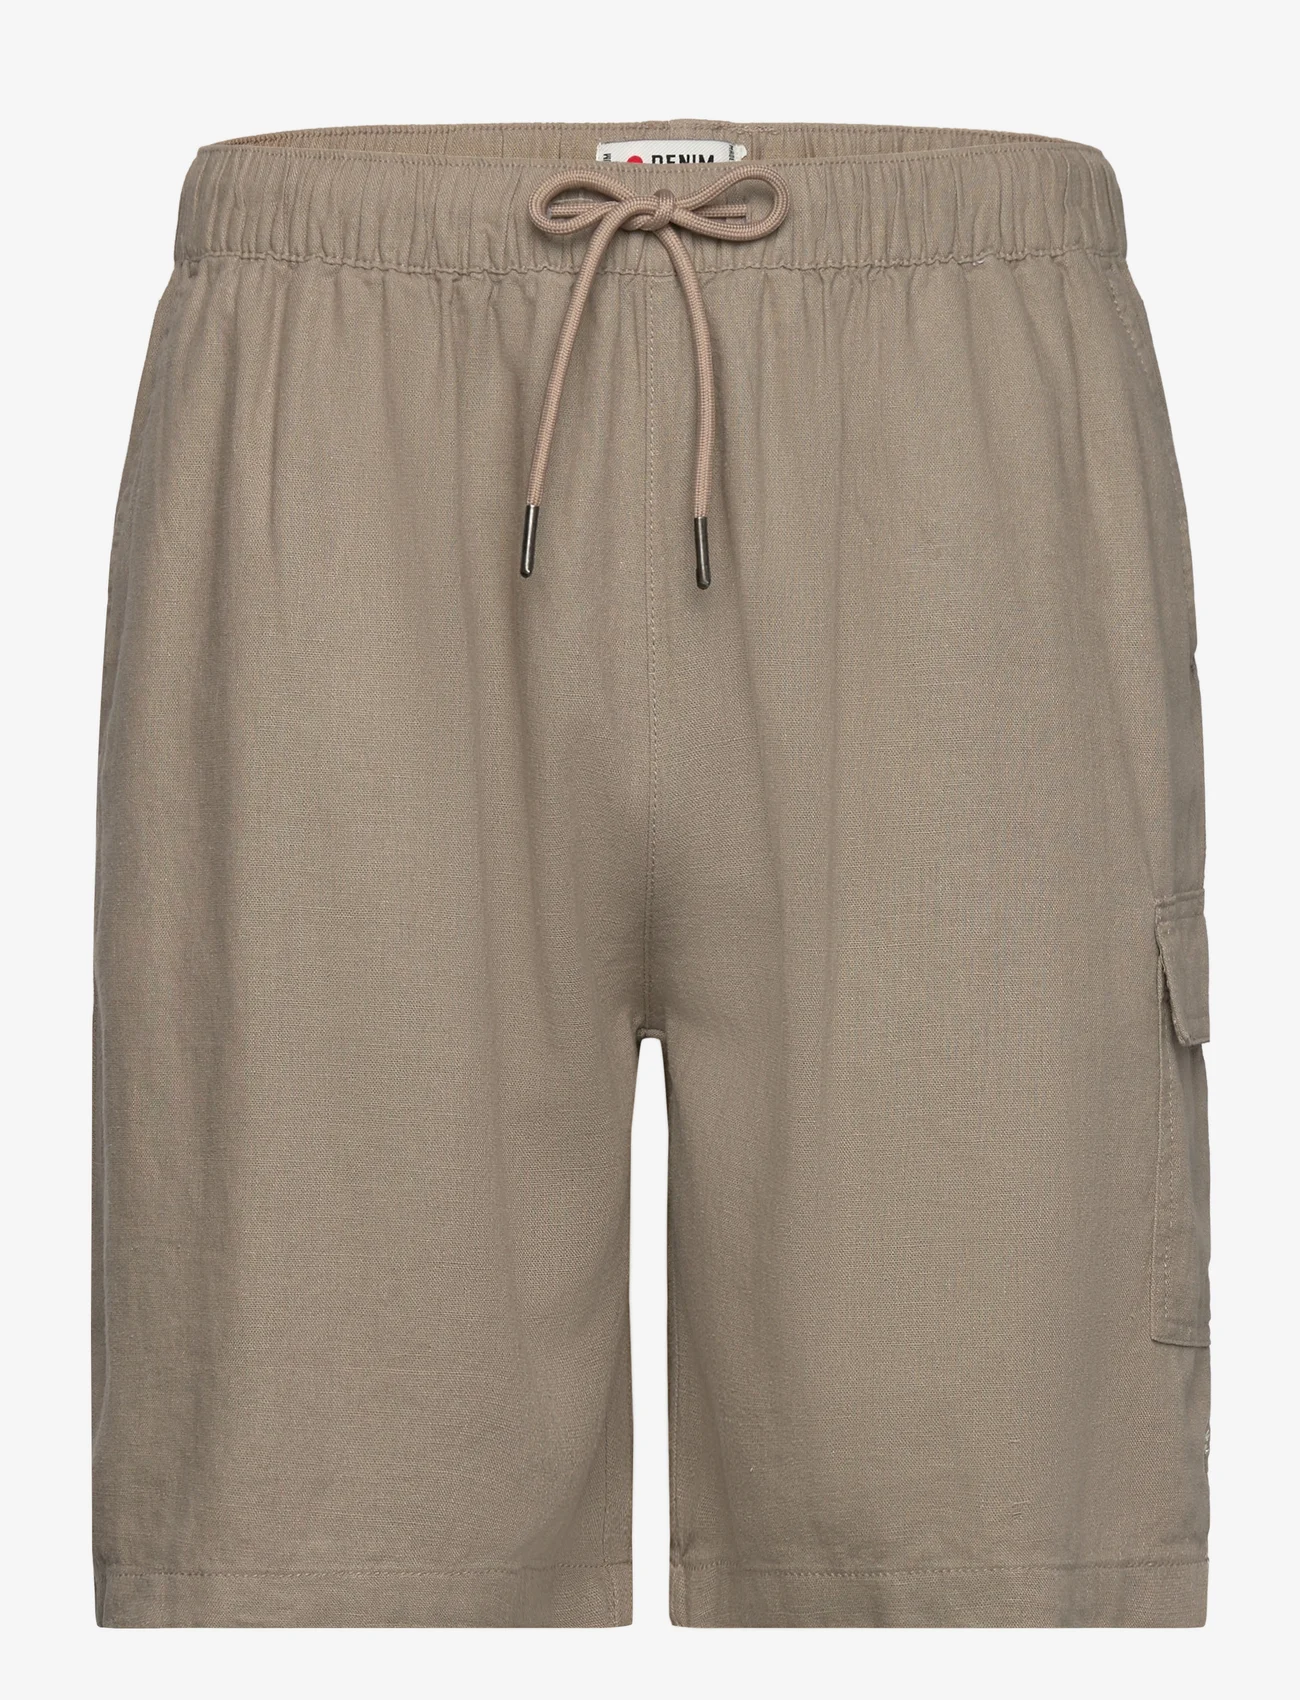 Denim project - DPLinen Blend Pocket Shorts - linen shorts - roasted cashew - 0